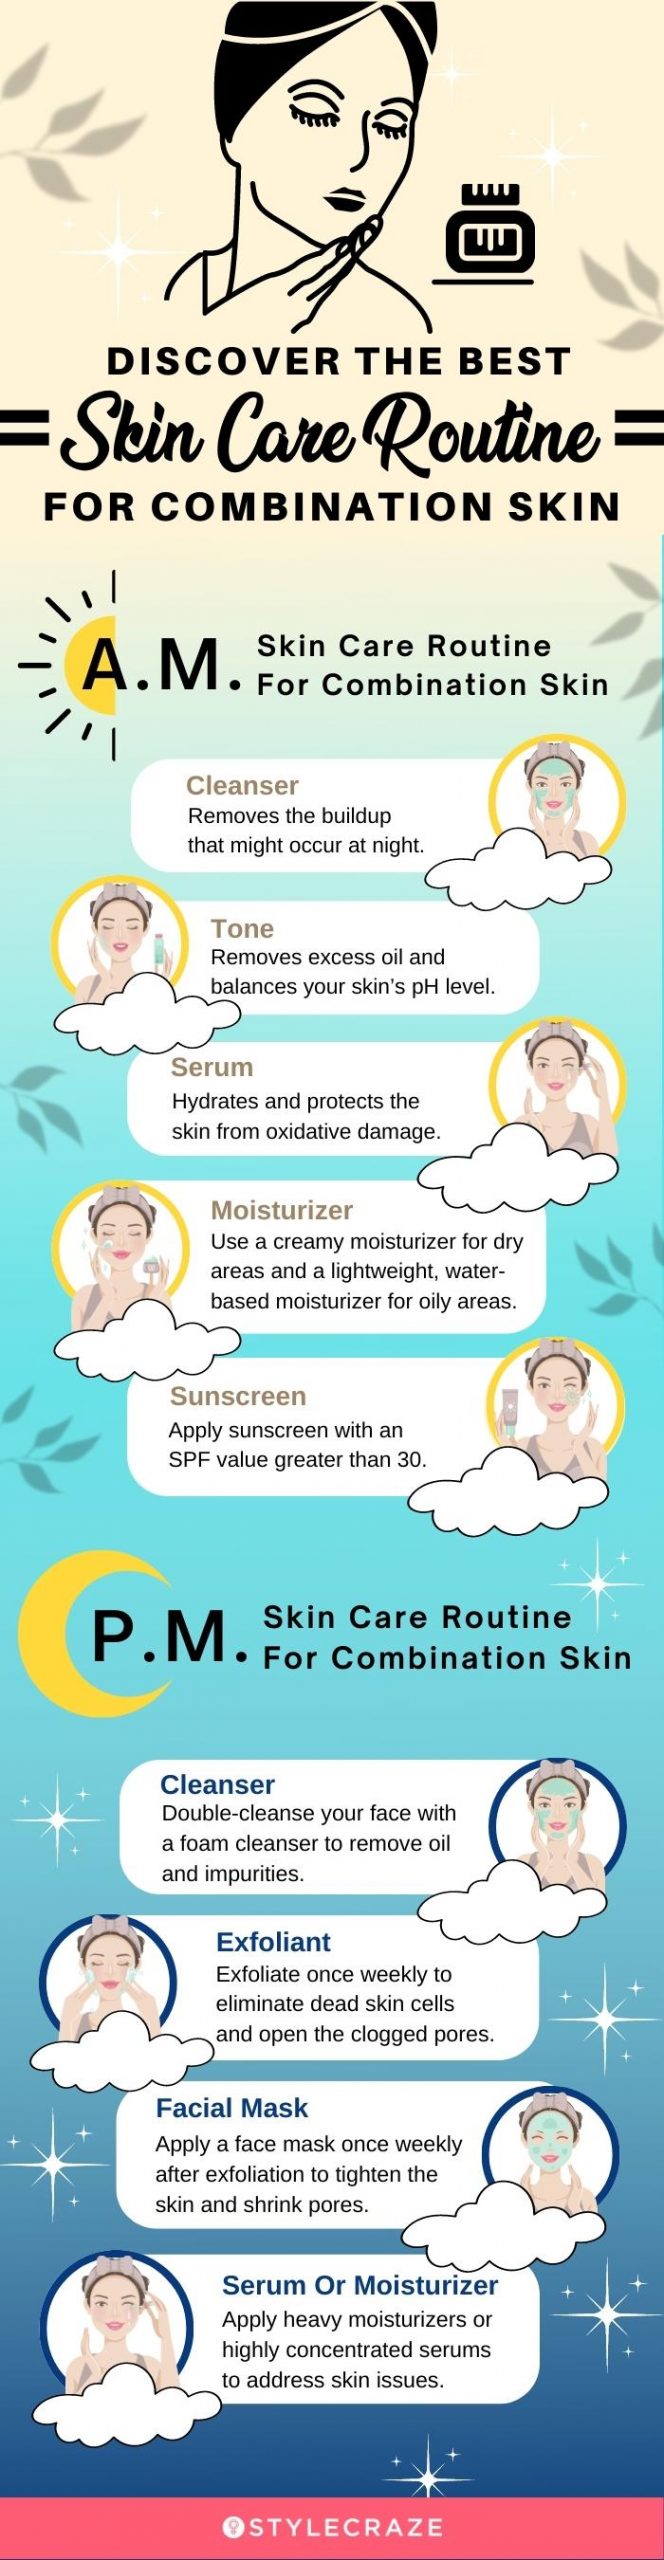 Skin Care Routine For Combination Skin